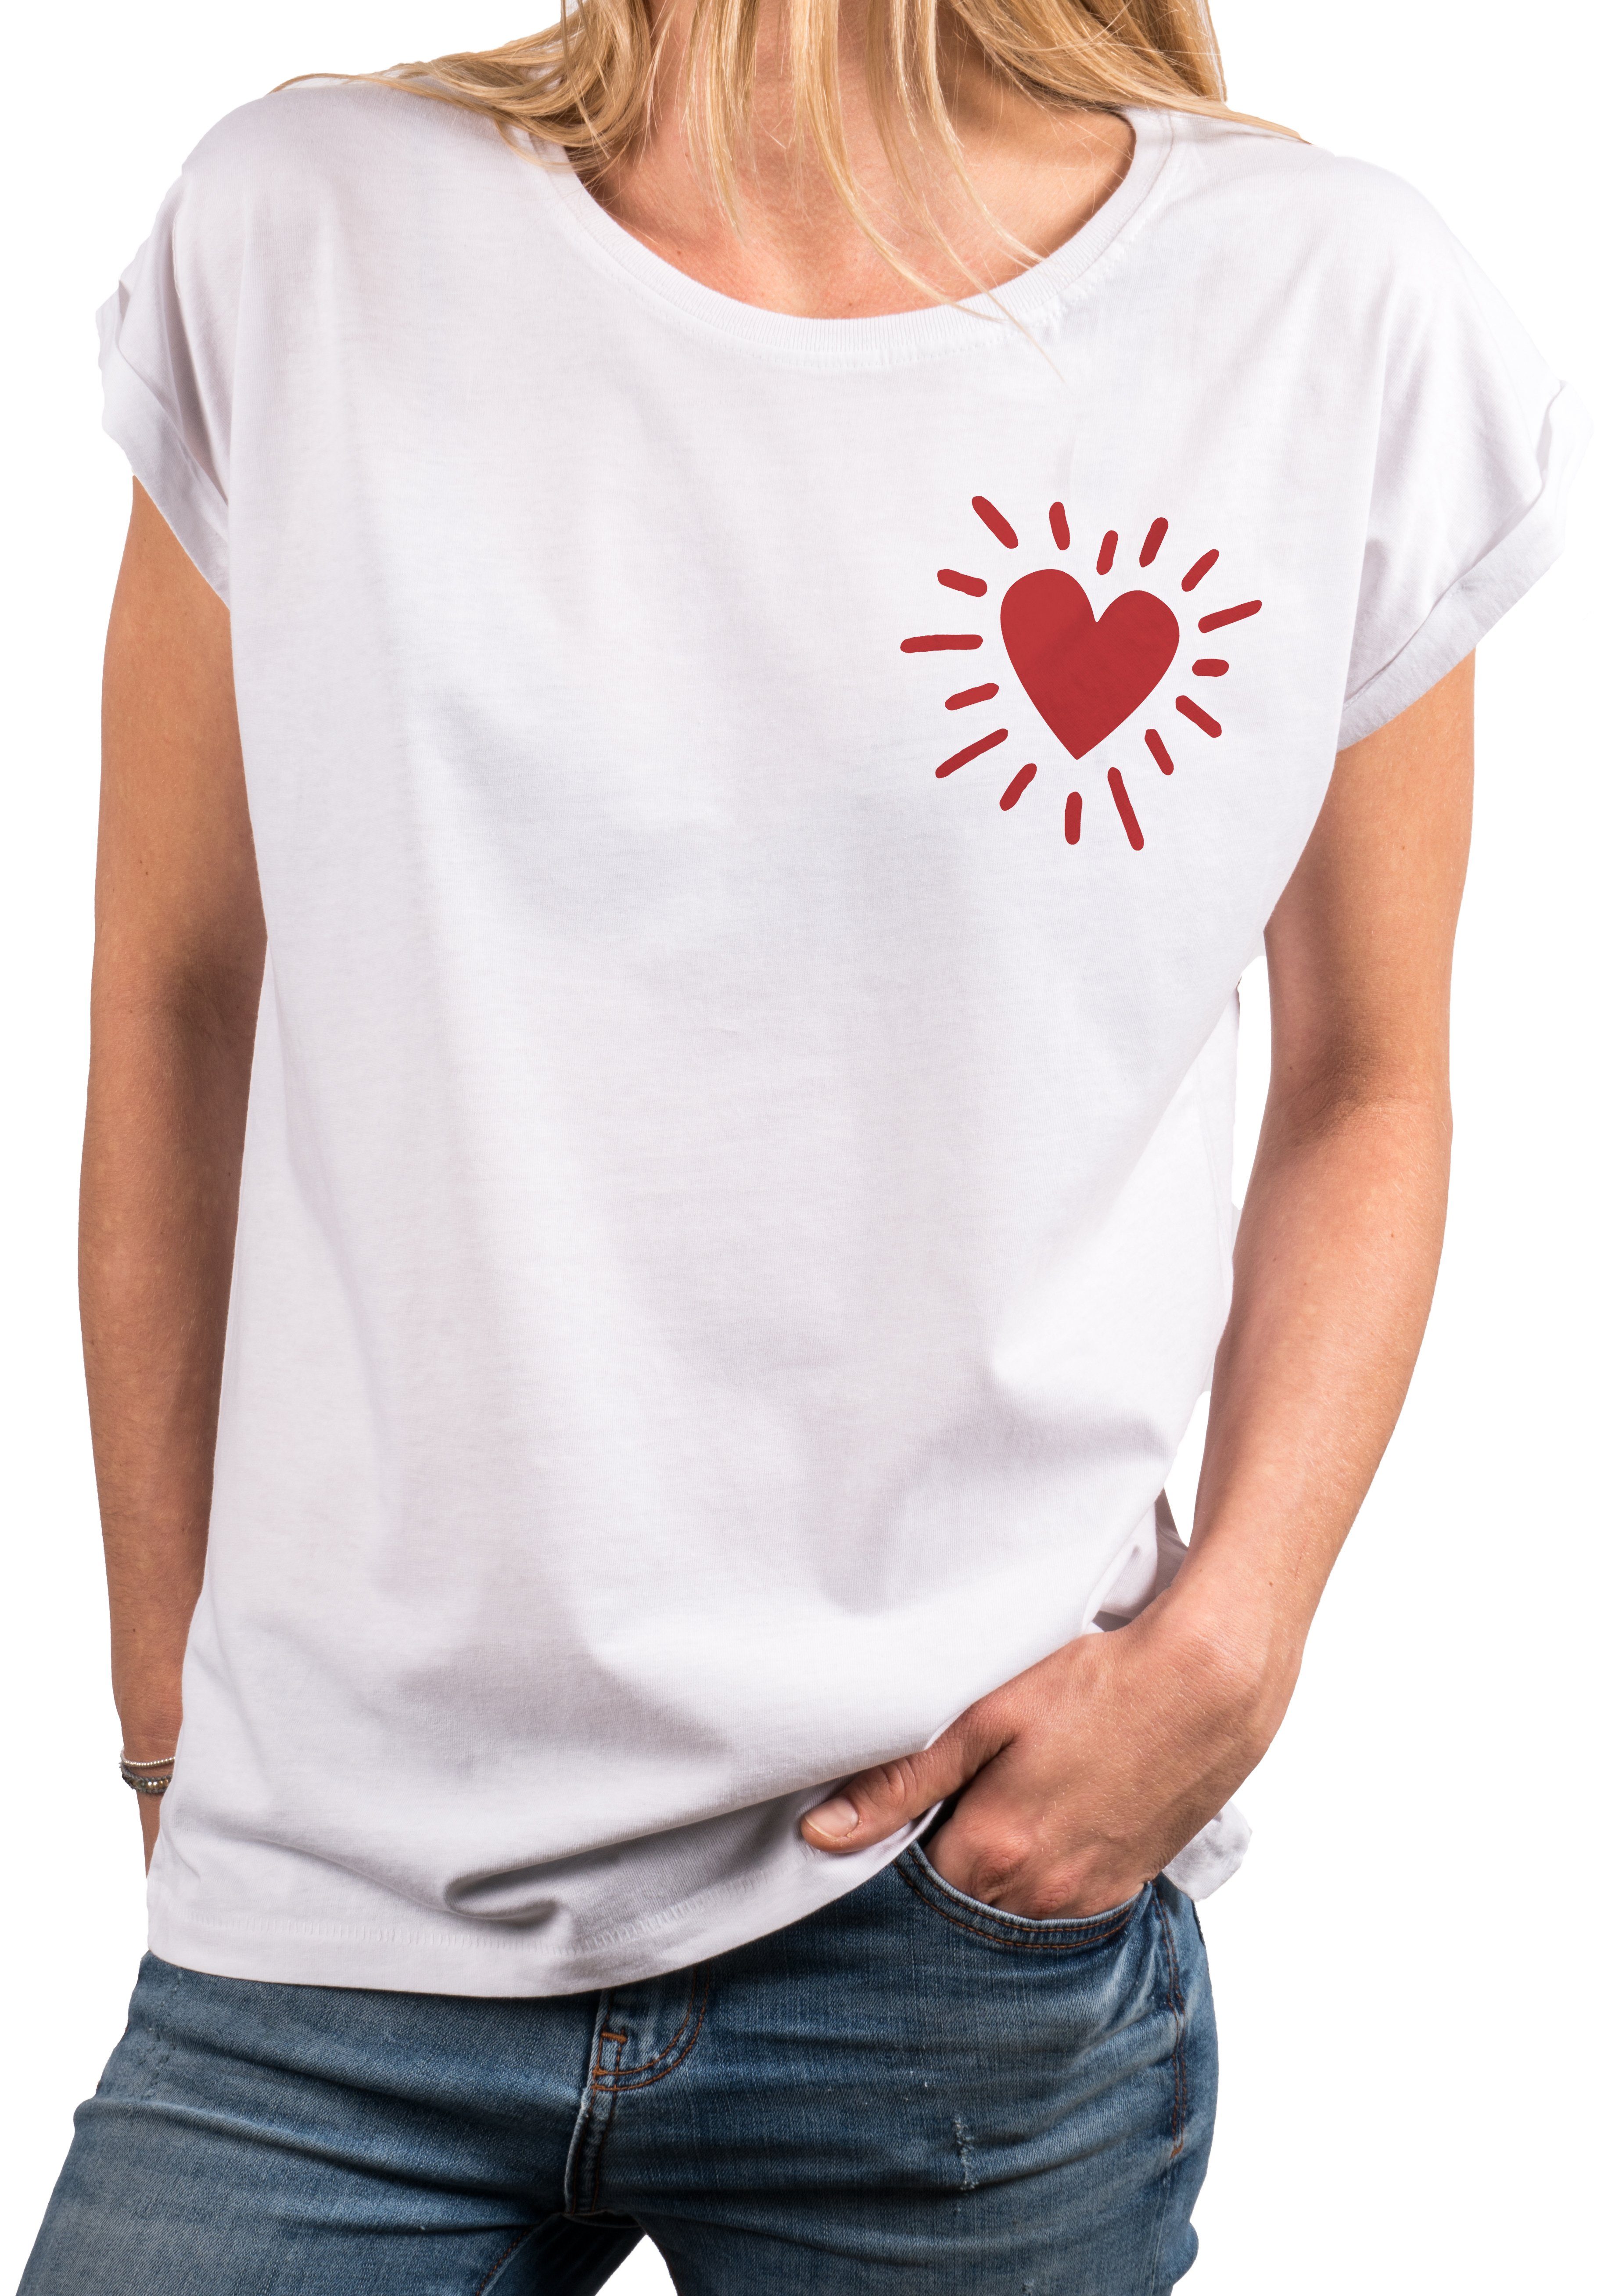 Damen Herzen Print-Shirt Oberteile, Druck Heart Frauen Baumwolle Herz MAKAYA Kurzam Aufdruck Top Modische Motiv